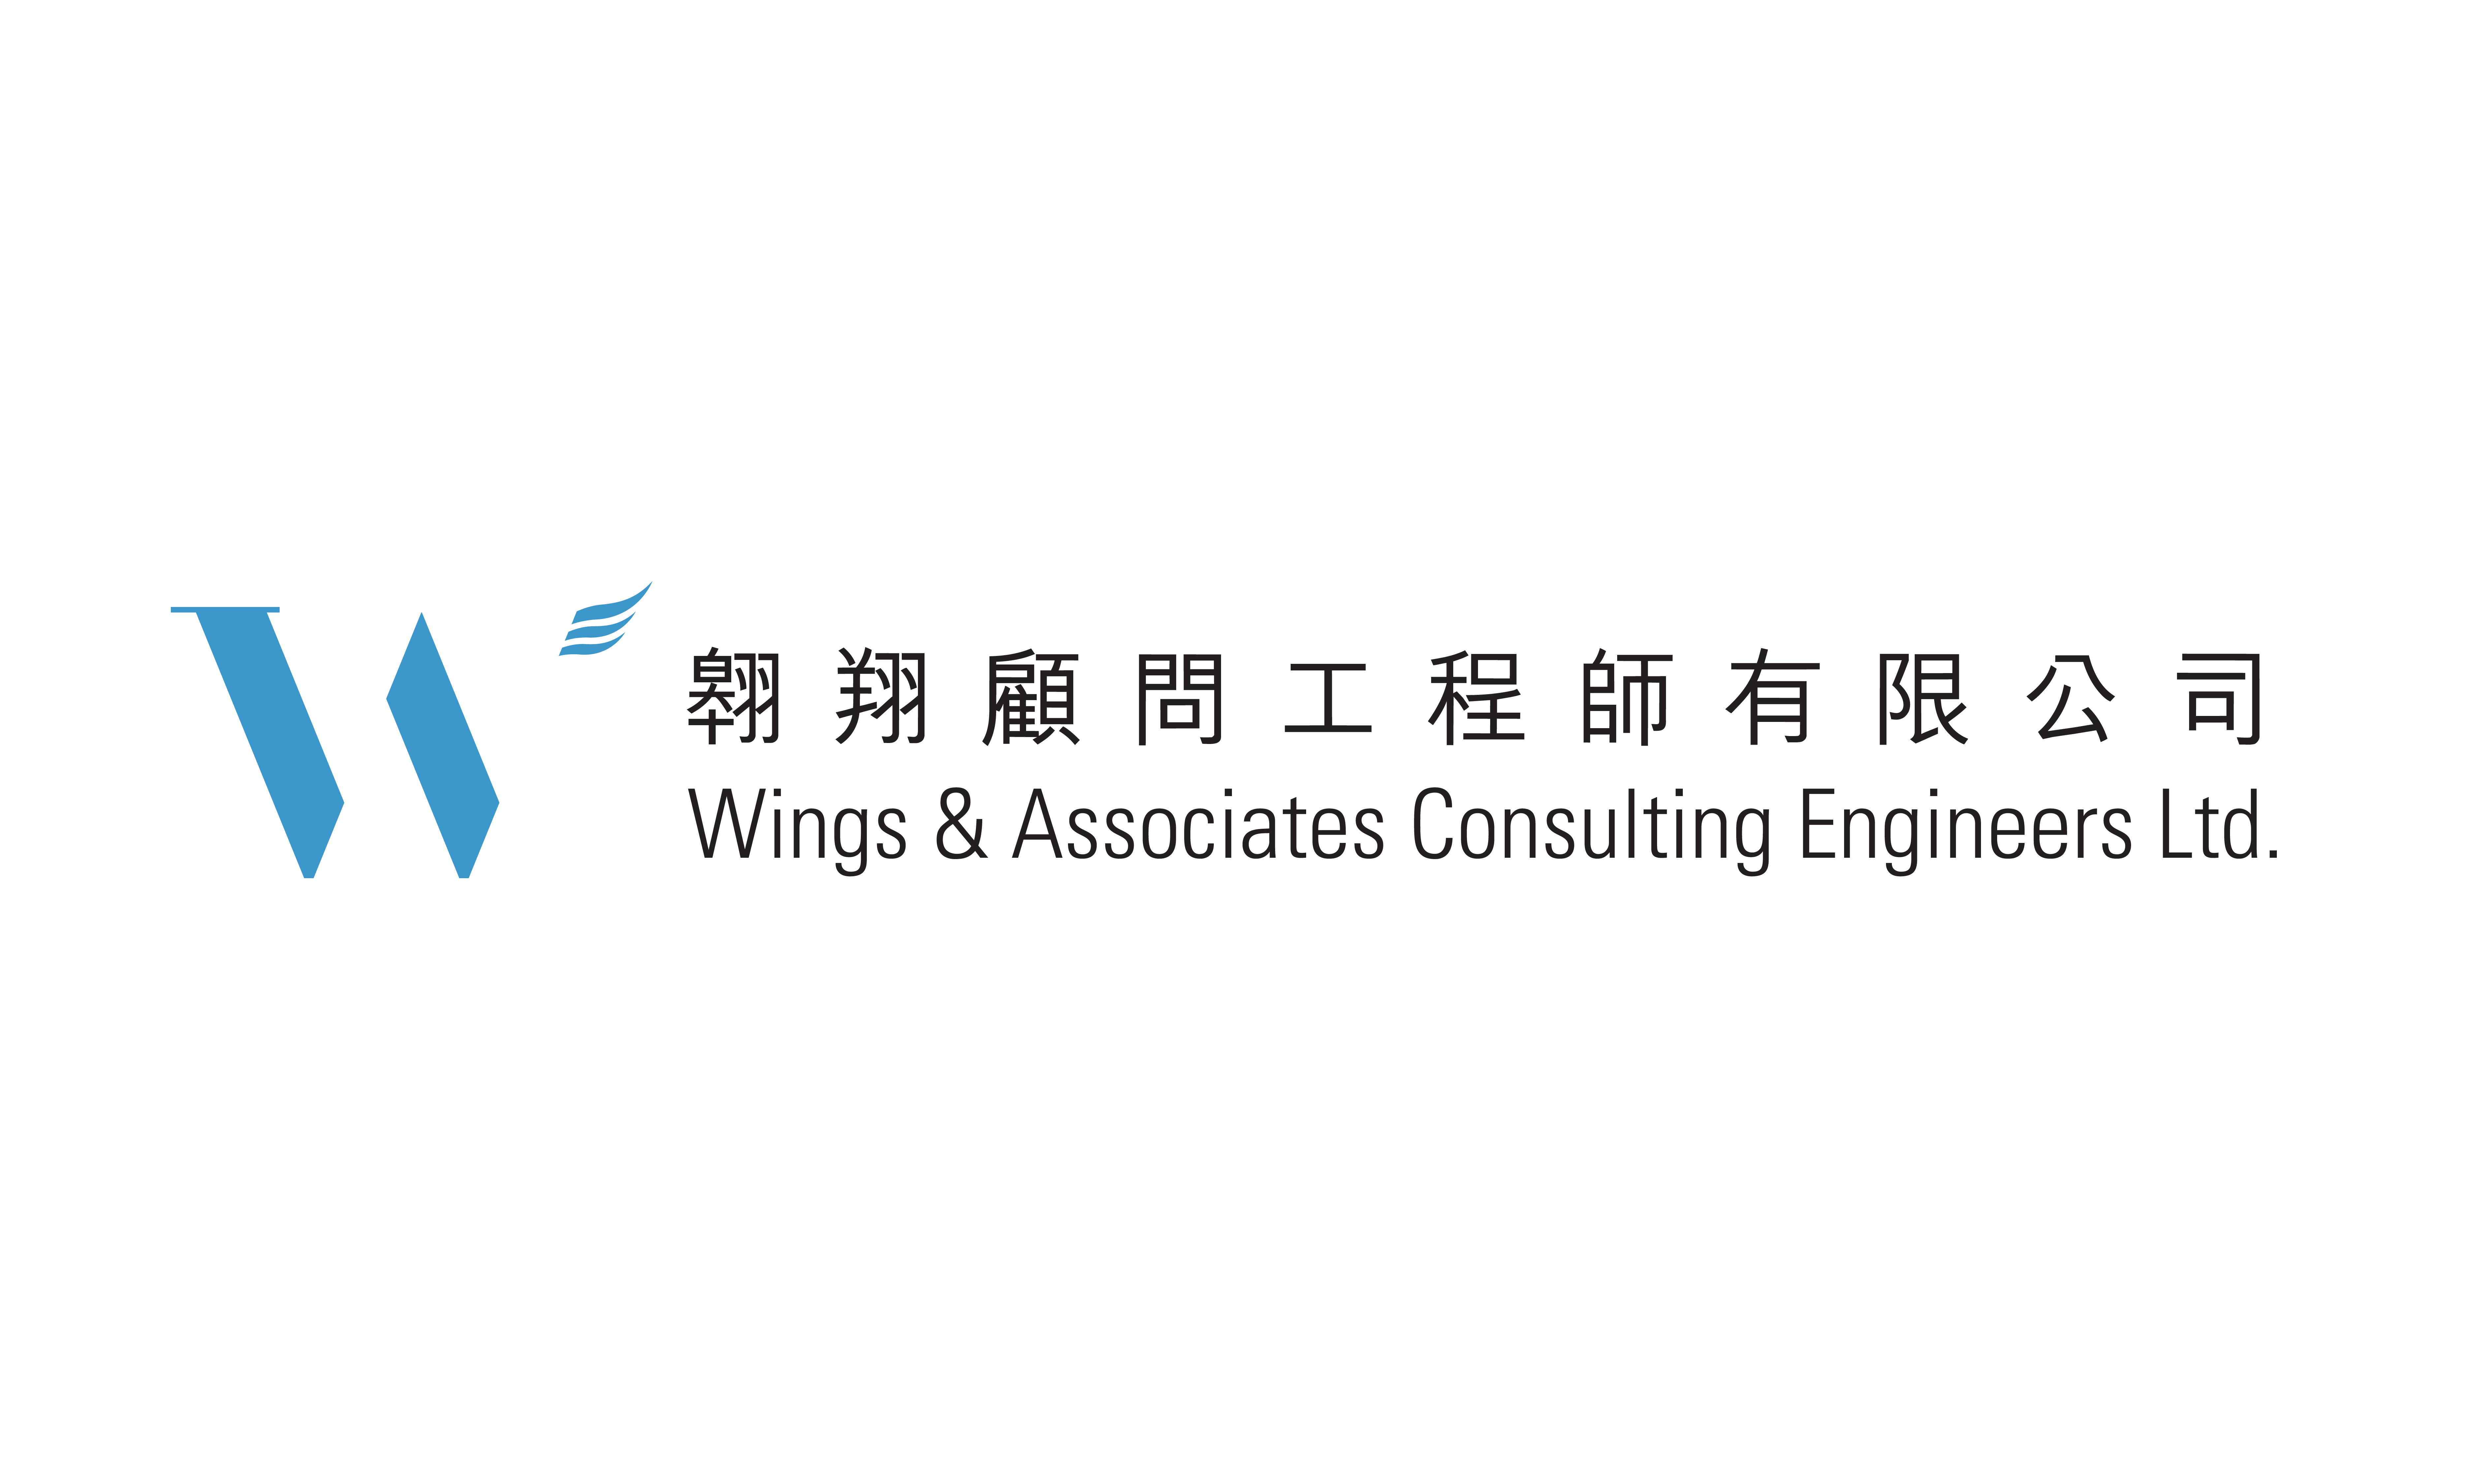 Wings & Associates Consulting Engineers Ltd